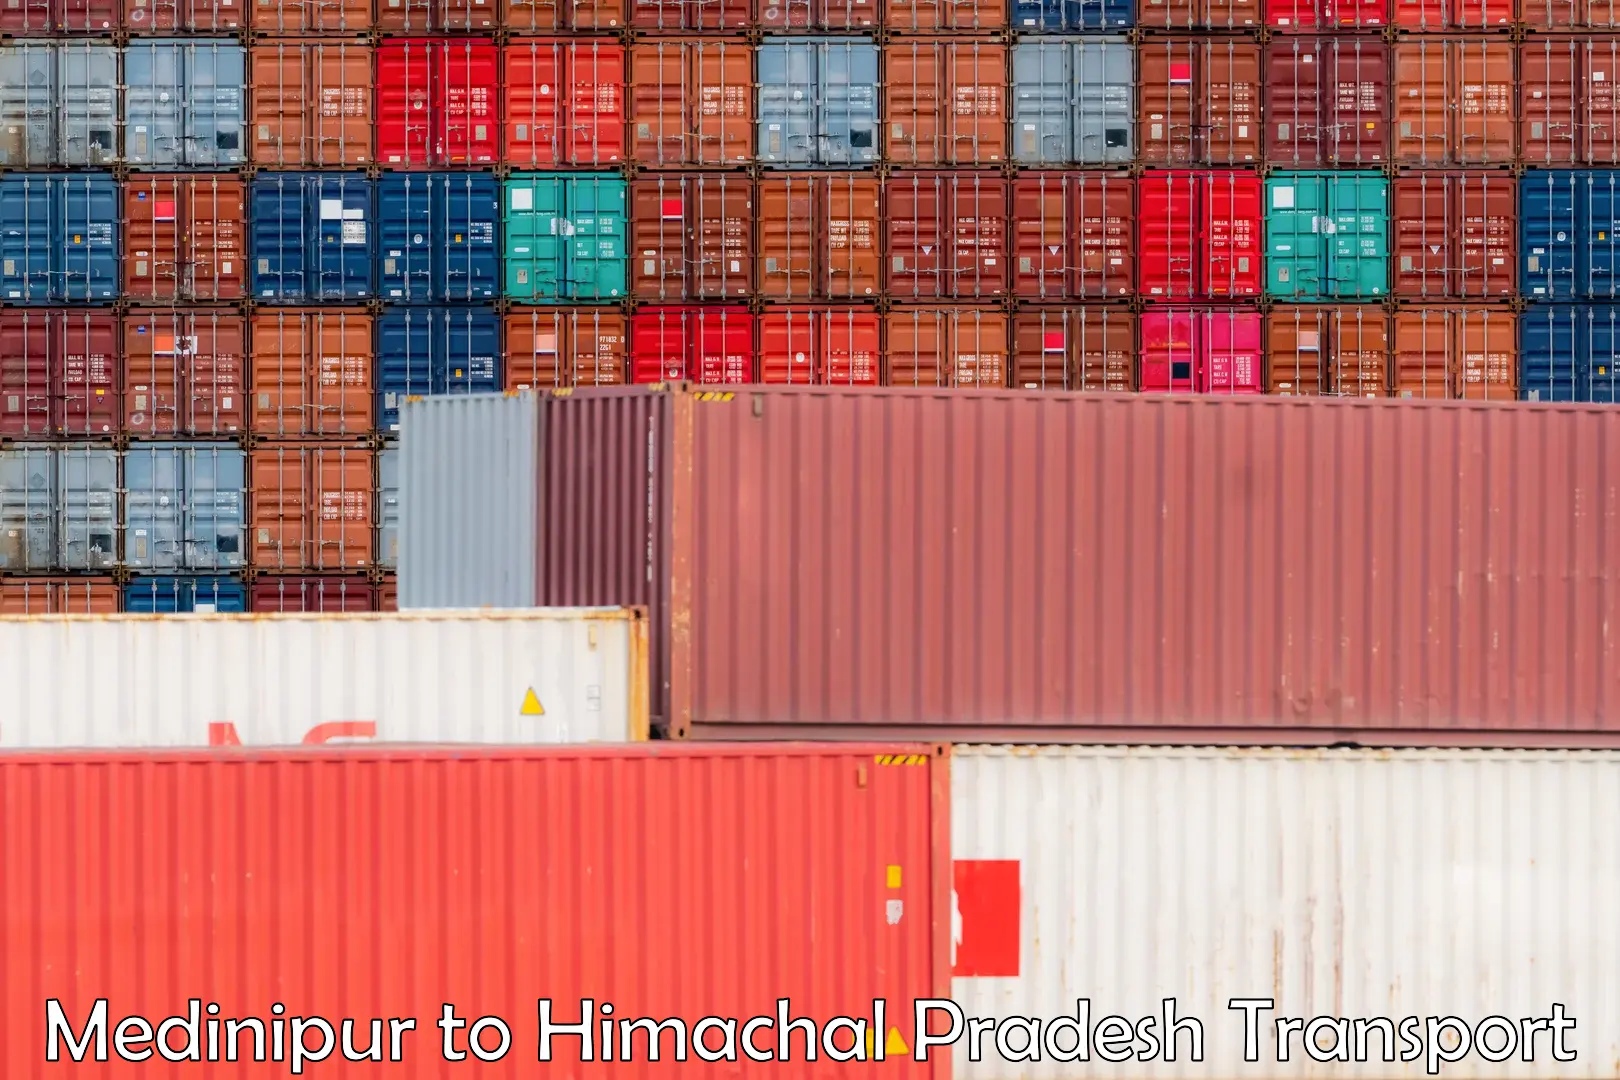 Truck transport companies in India Medinipur to Salouni